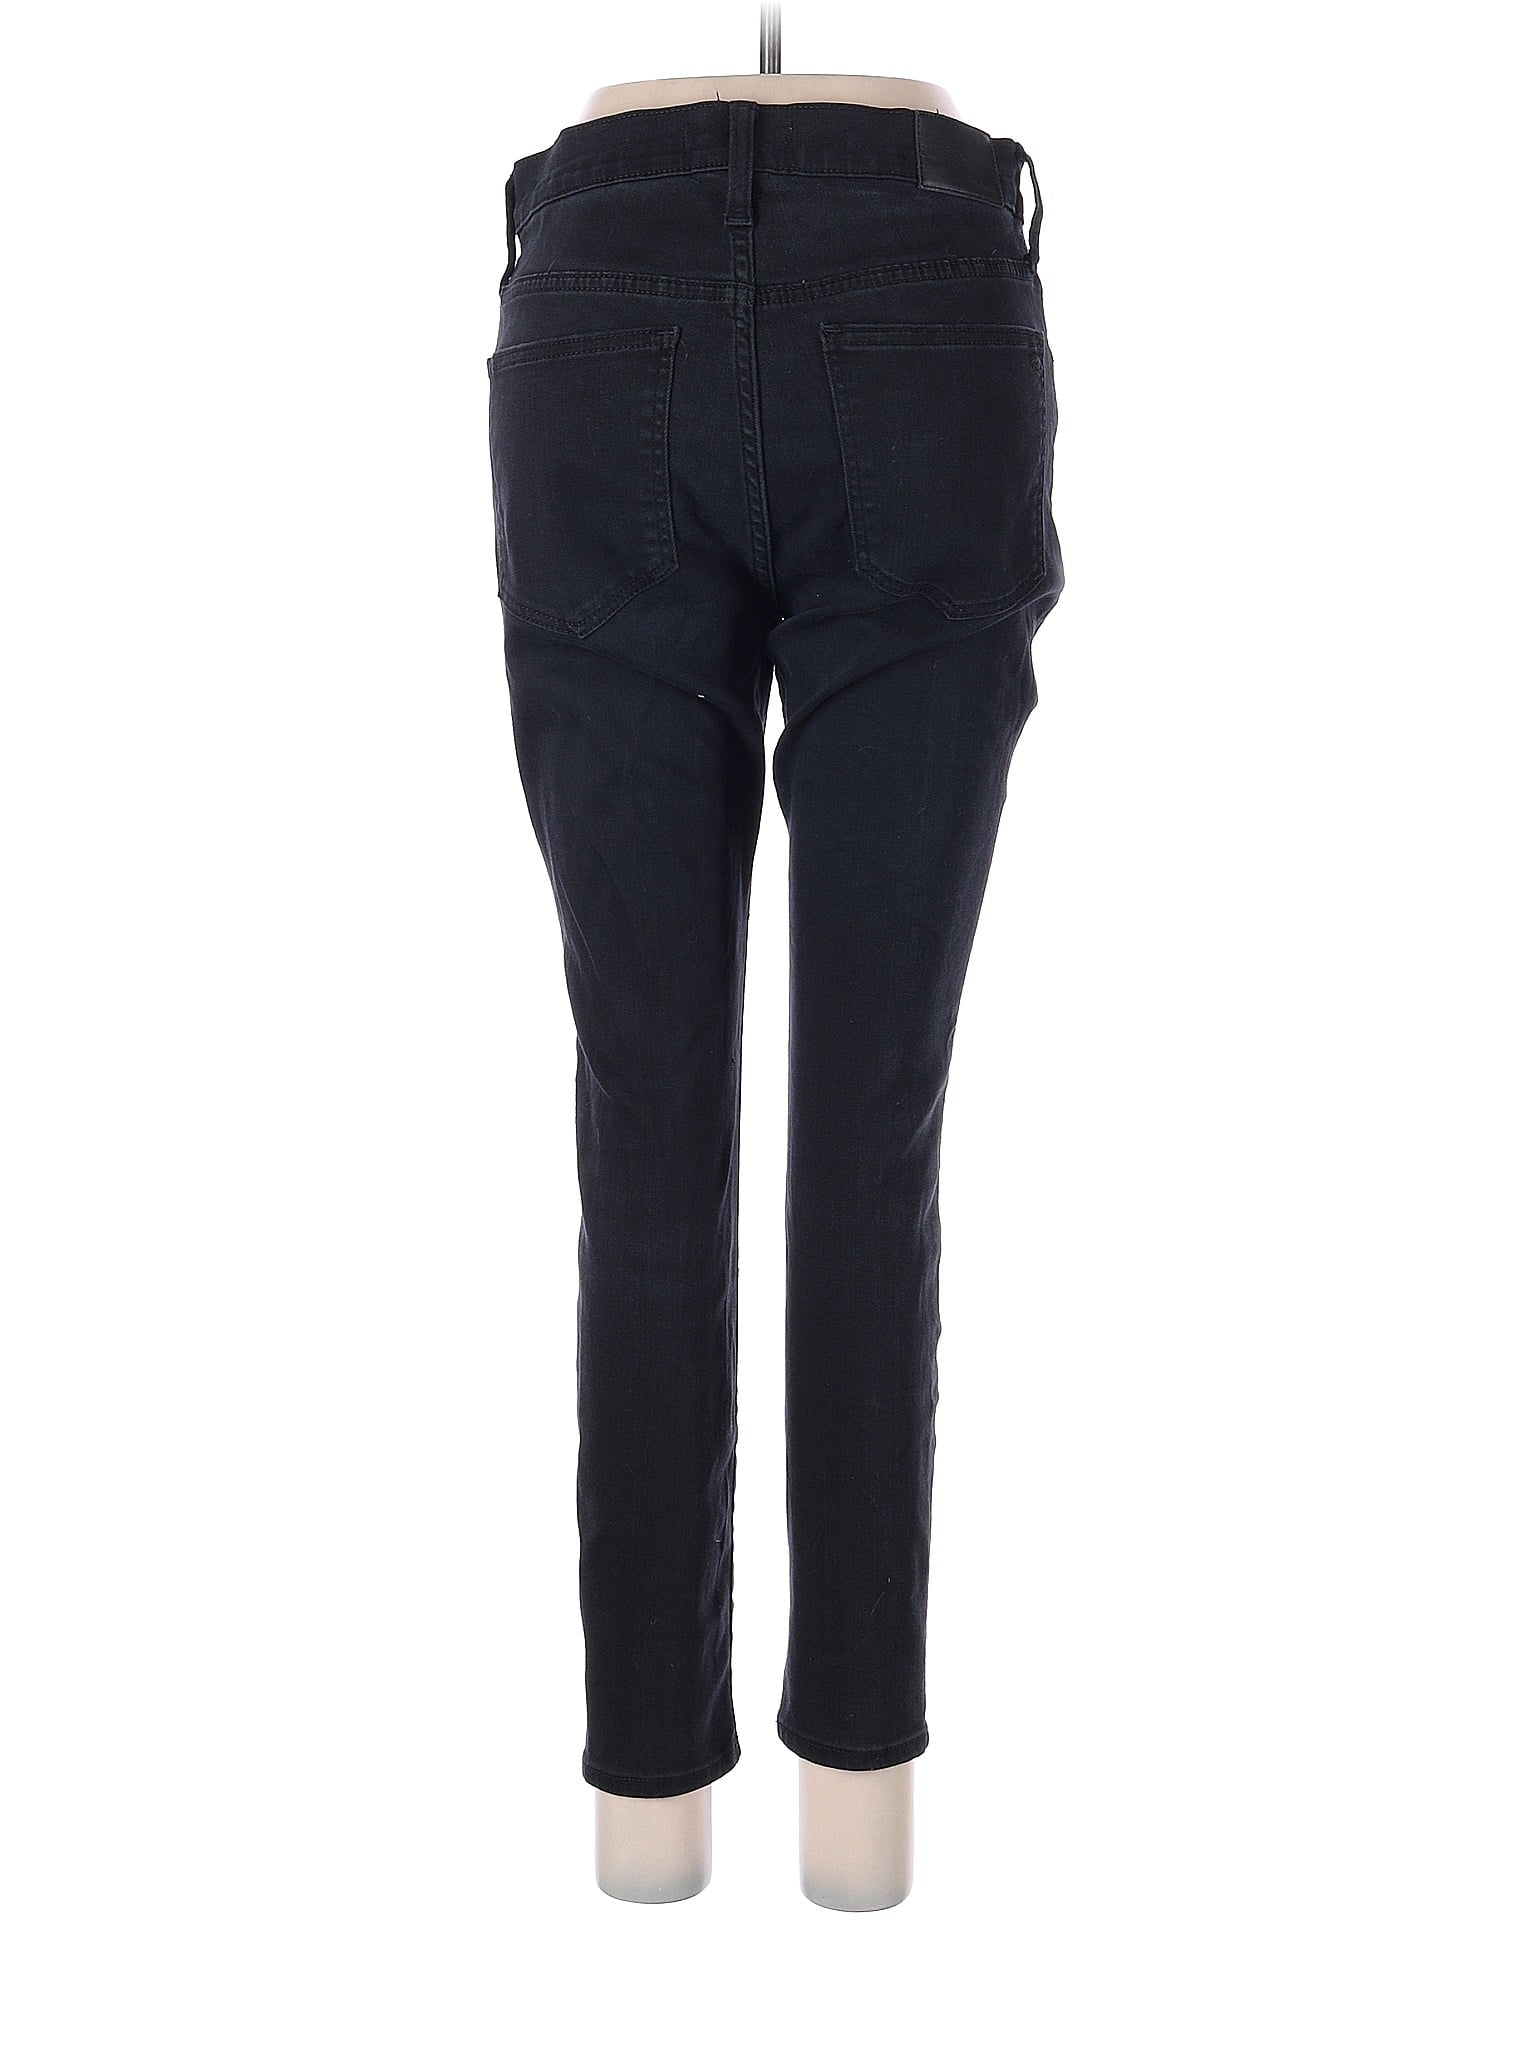 High-Rise Boyjeans Jeans in Dark Wash waist size - 29 P